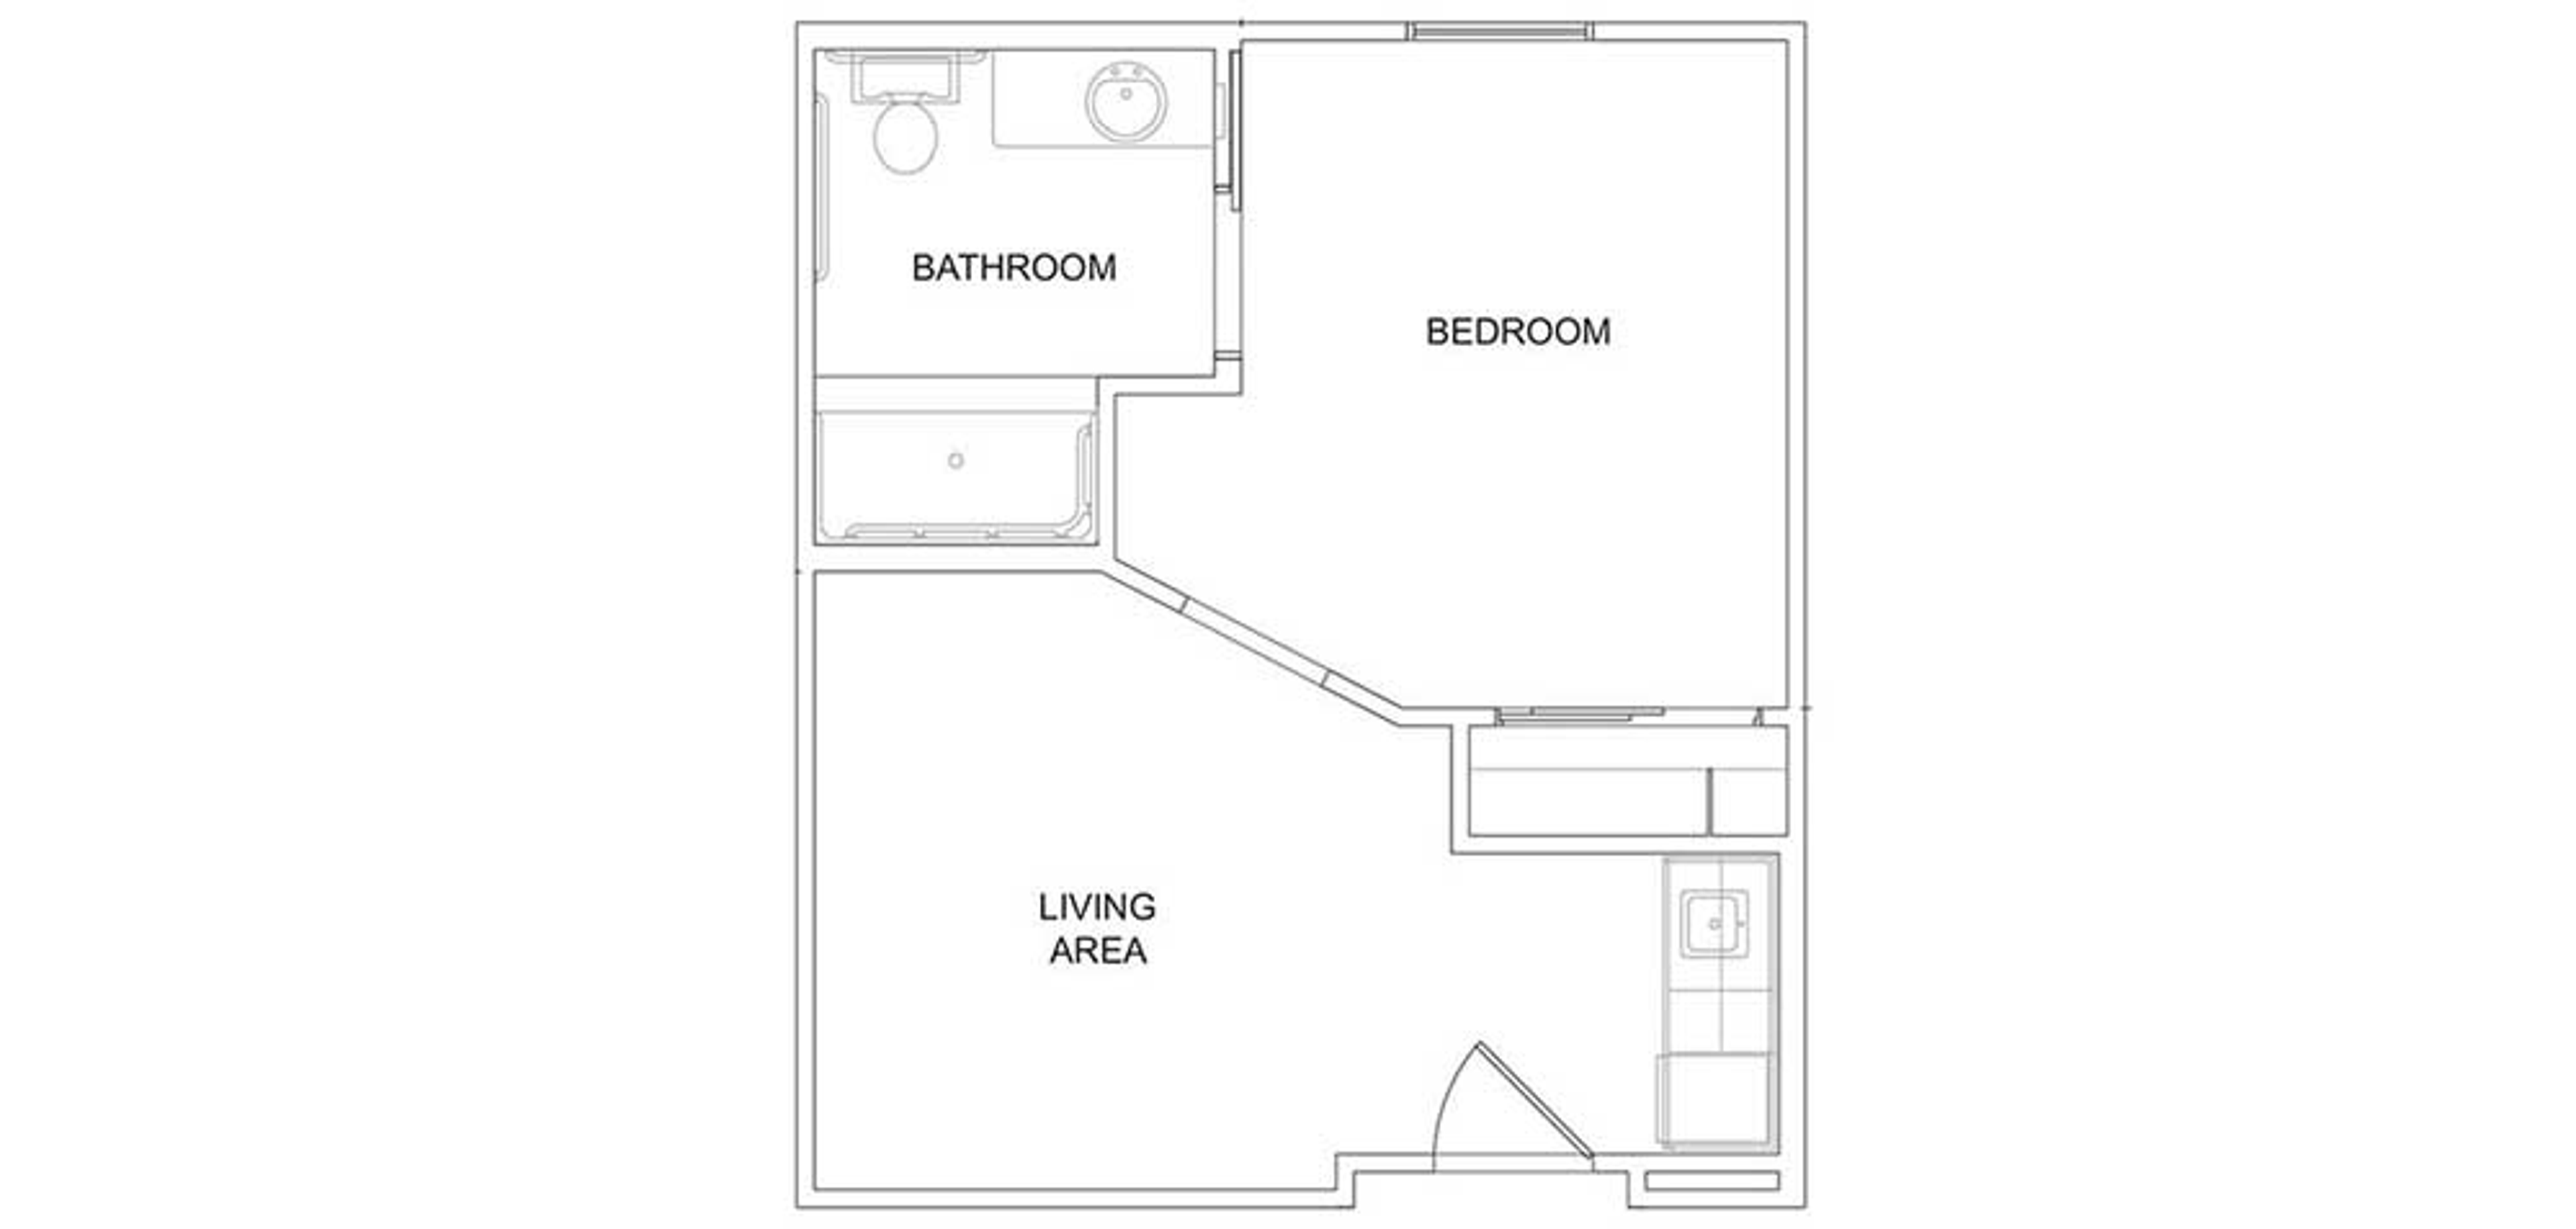 Floorplan - Santa Fe Trails - 1 bed, 1 bath, Deluxe Assisted Living